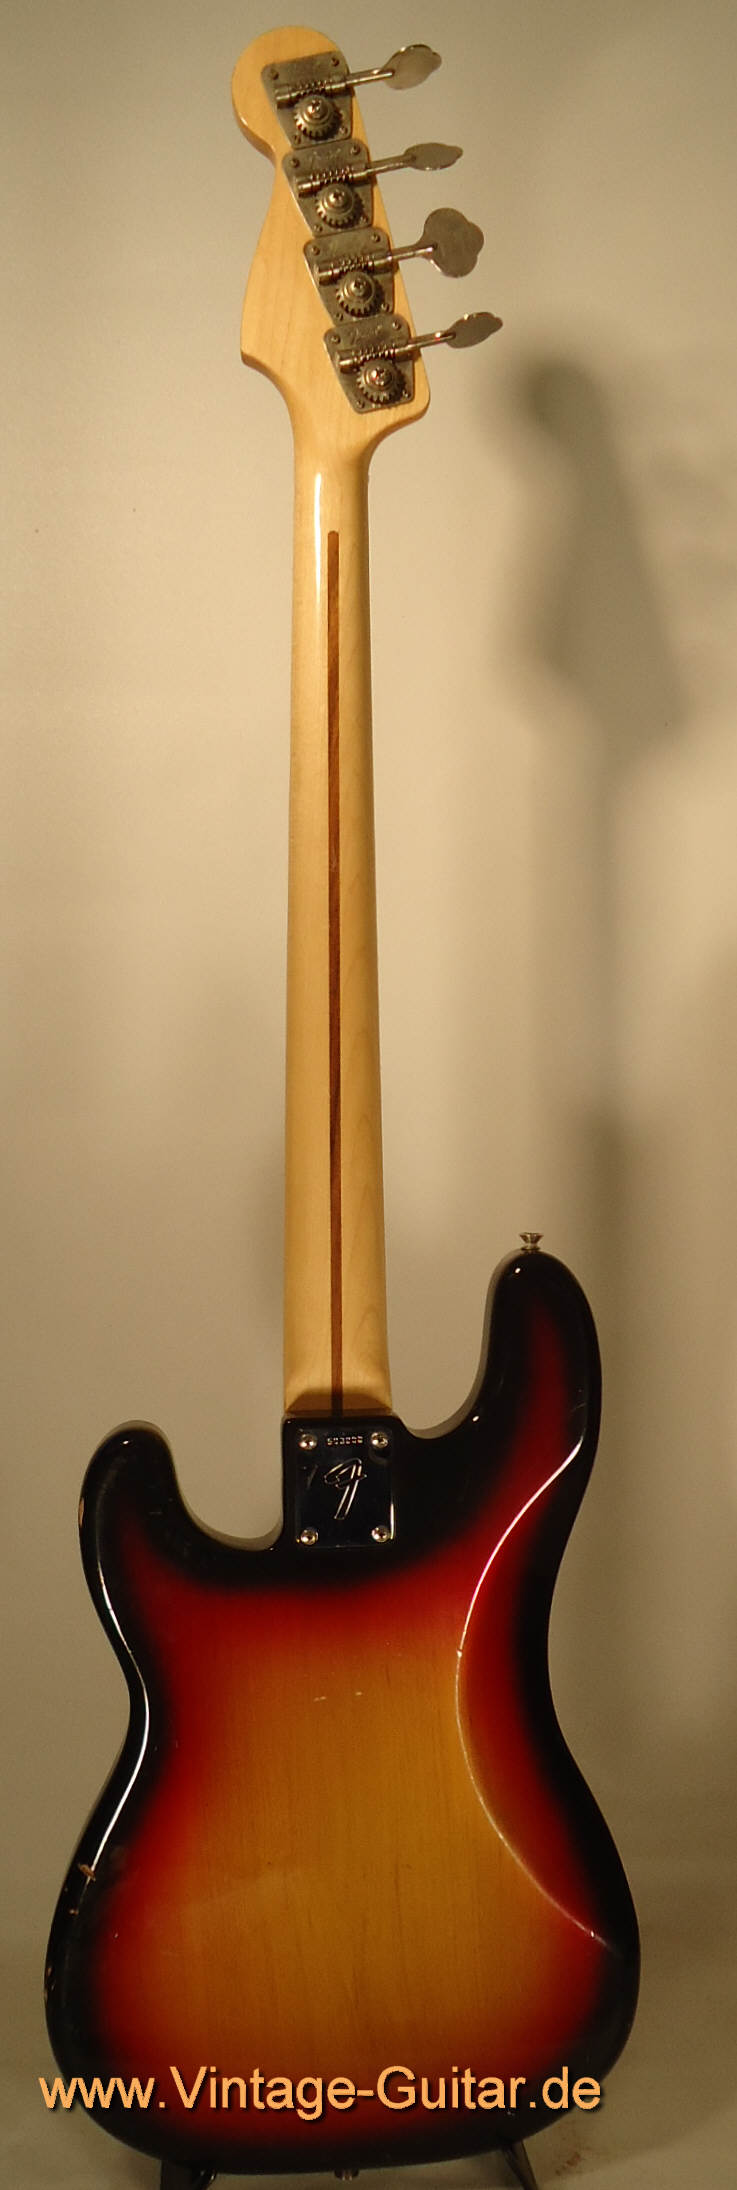 Fender_Precision_Bass_1974_sb_b.jpg